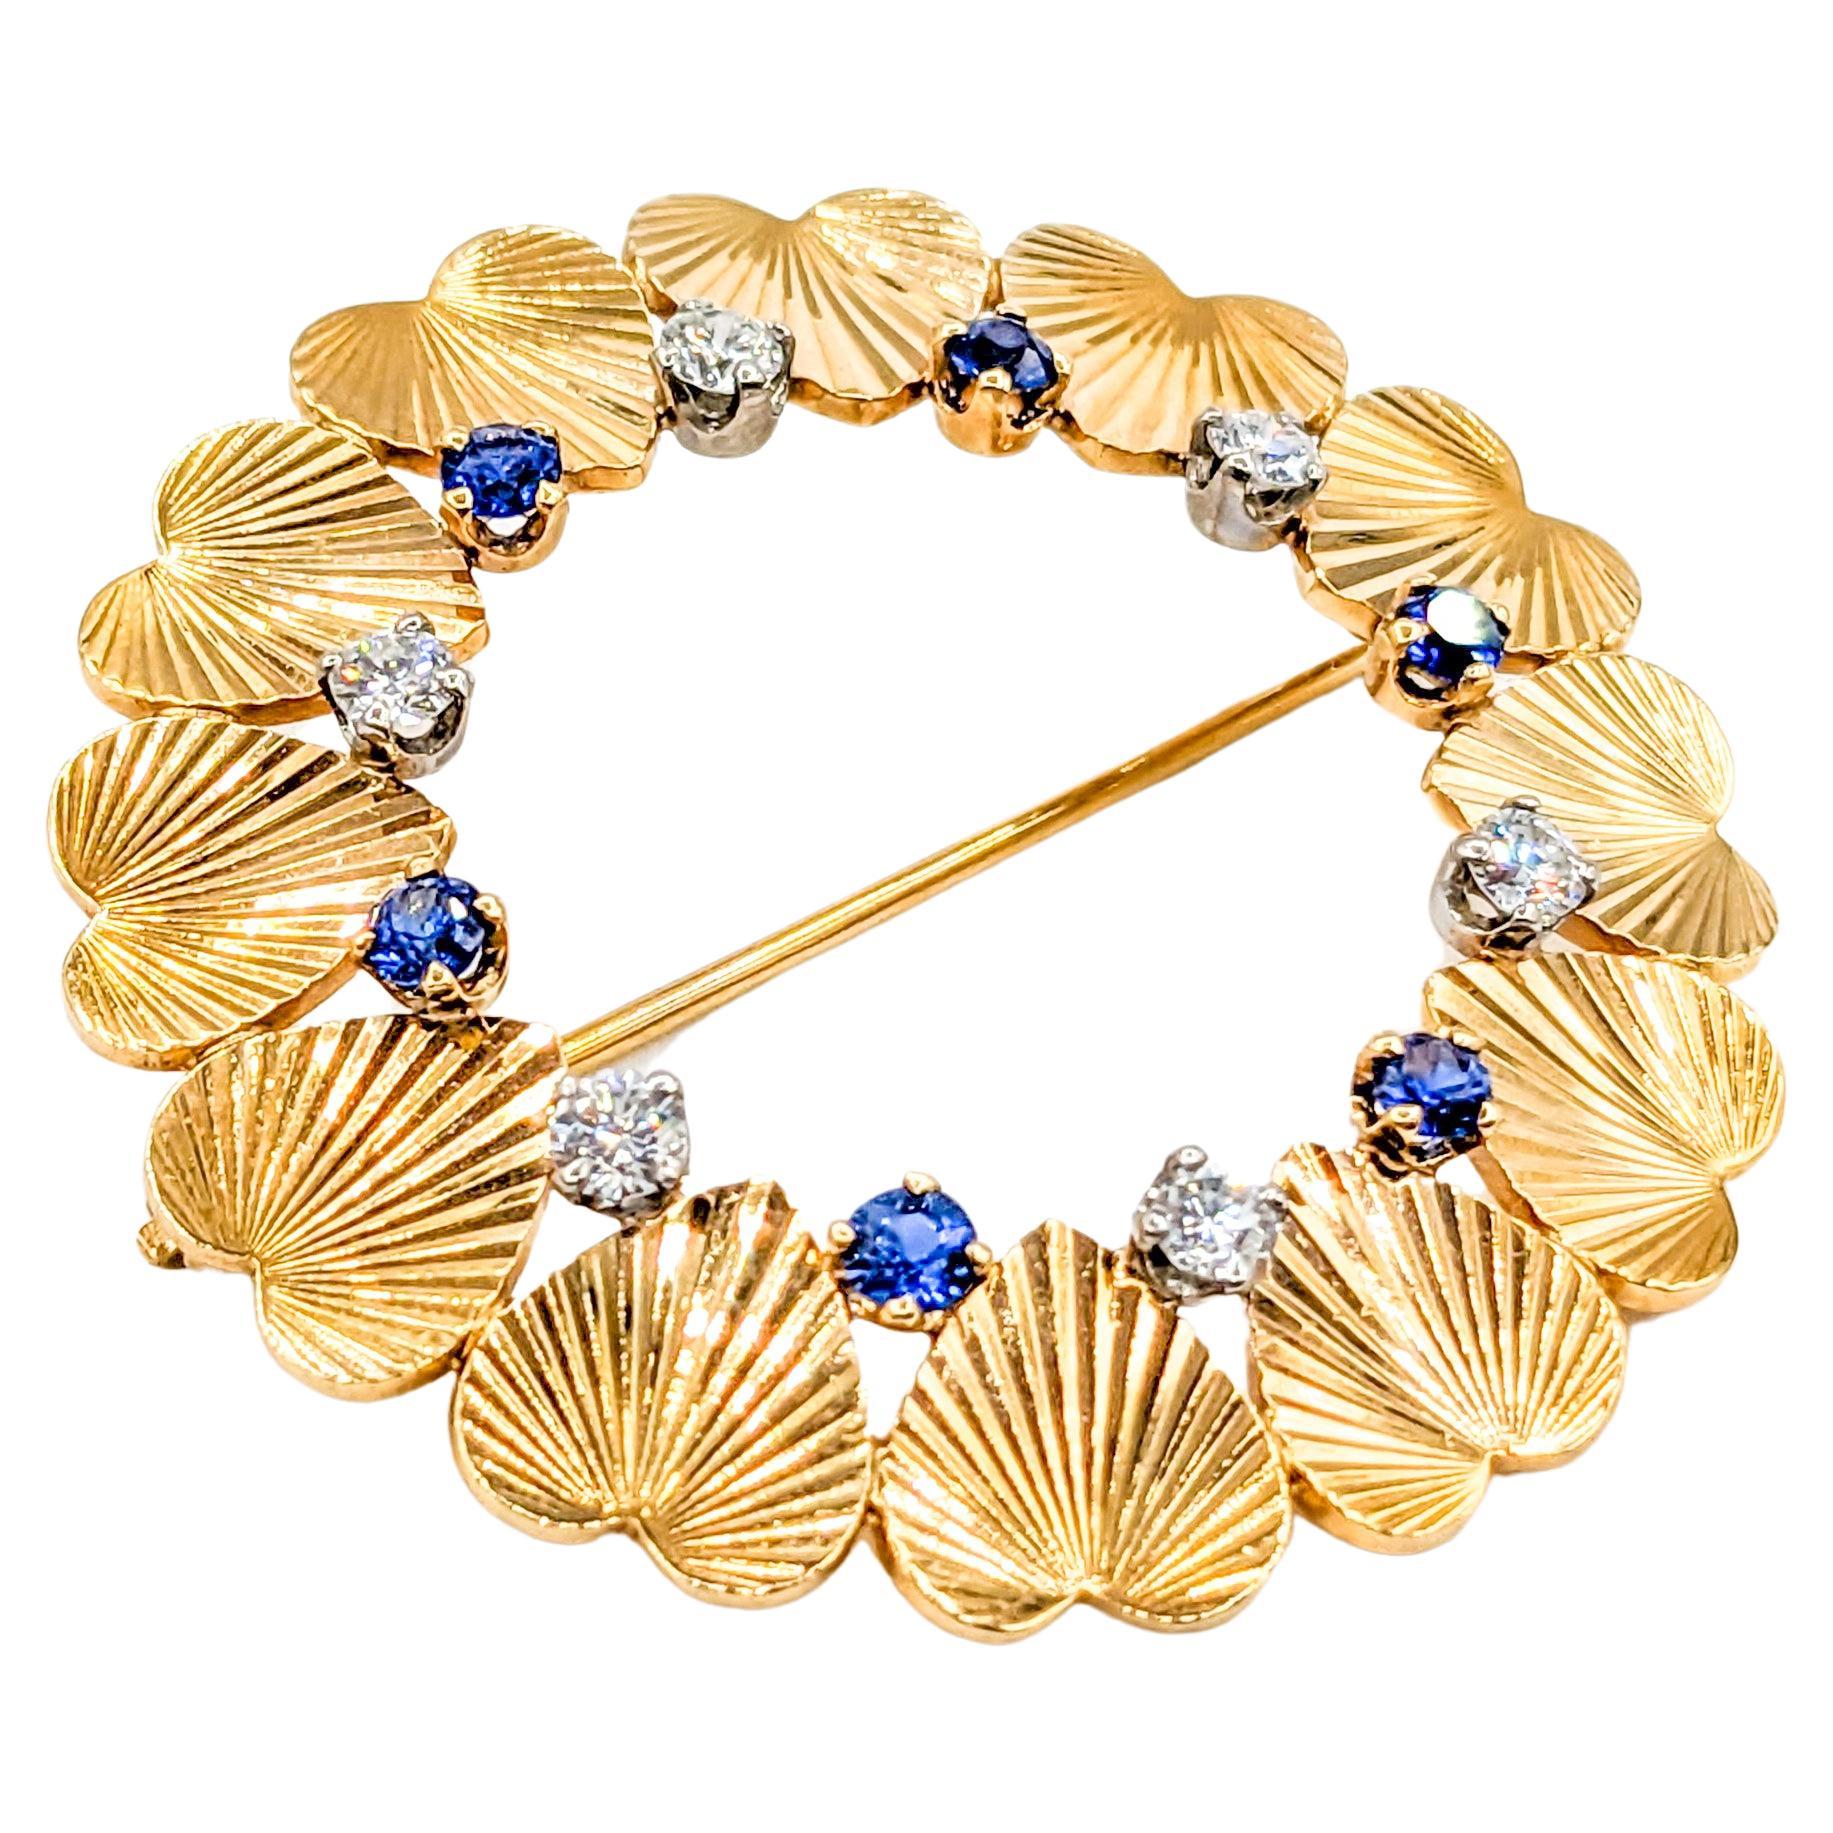 Broche corazón de oro de 14 quilates con diamantes y zafiros de mediados de siglo